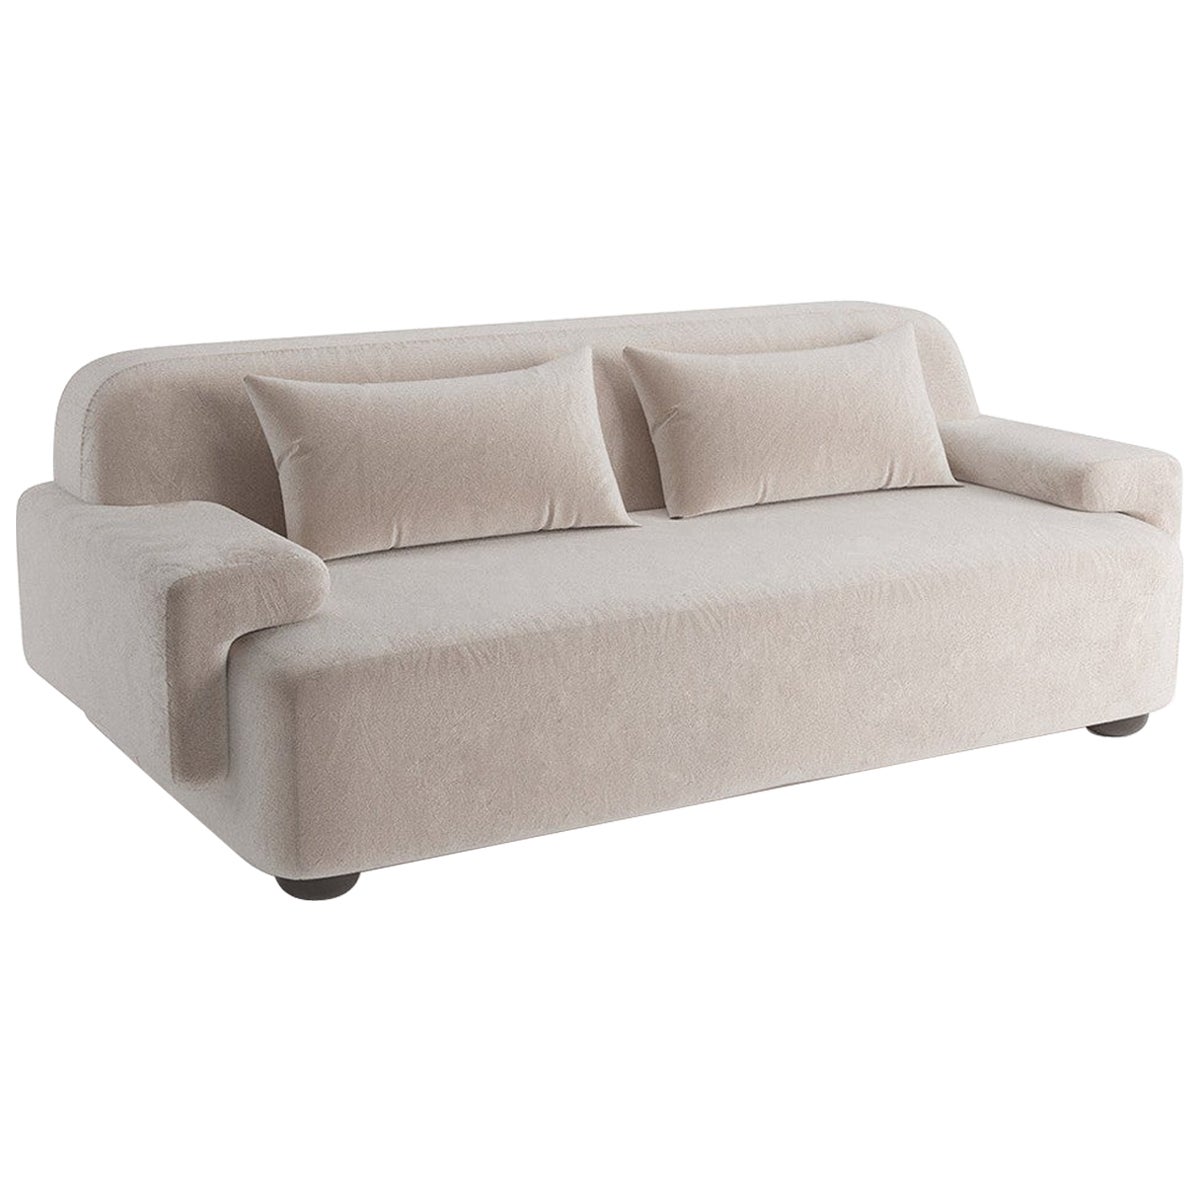 Popus Editions Lena 4 Seater Sofa in Beige Verone Velvet Upholstery